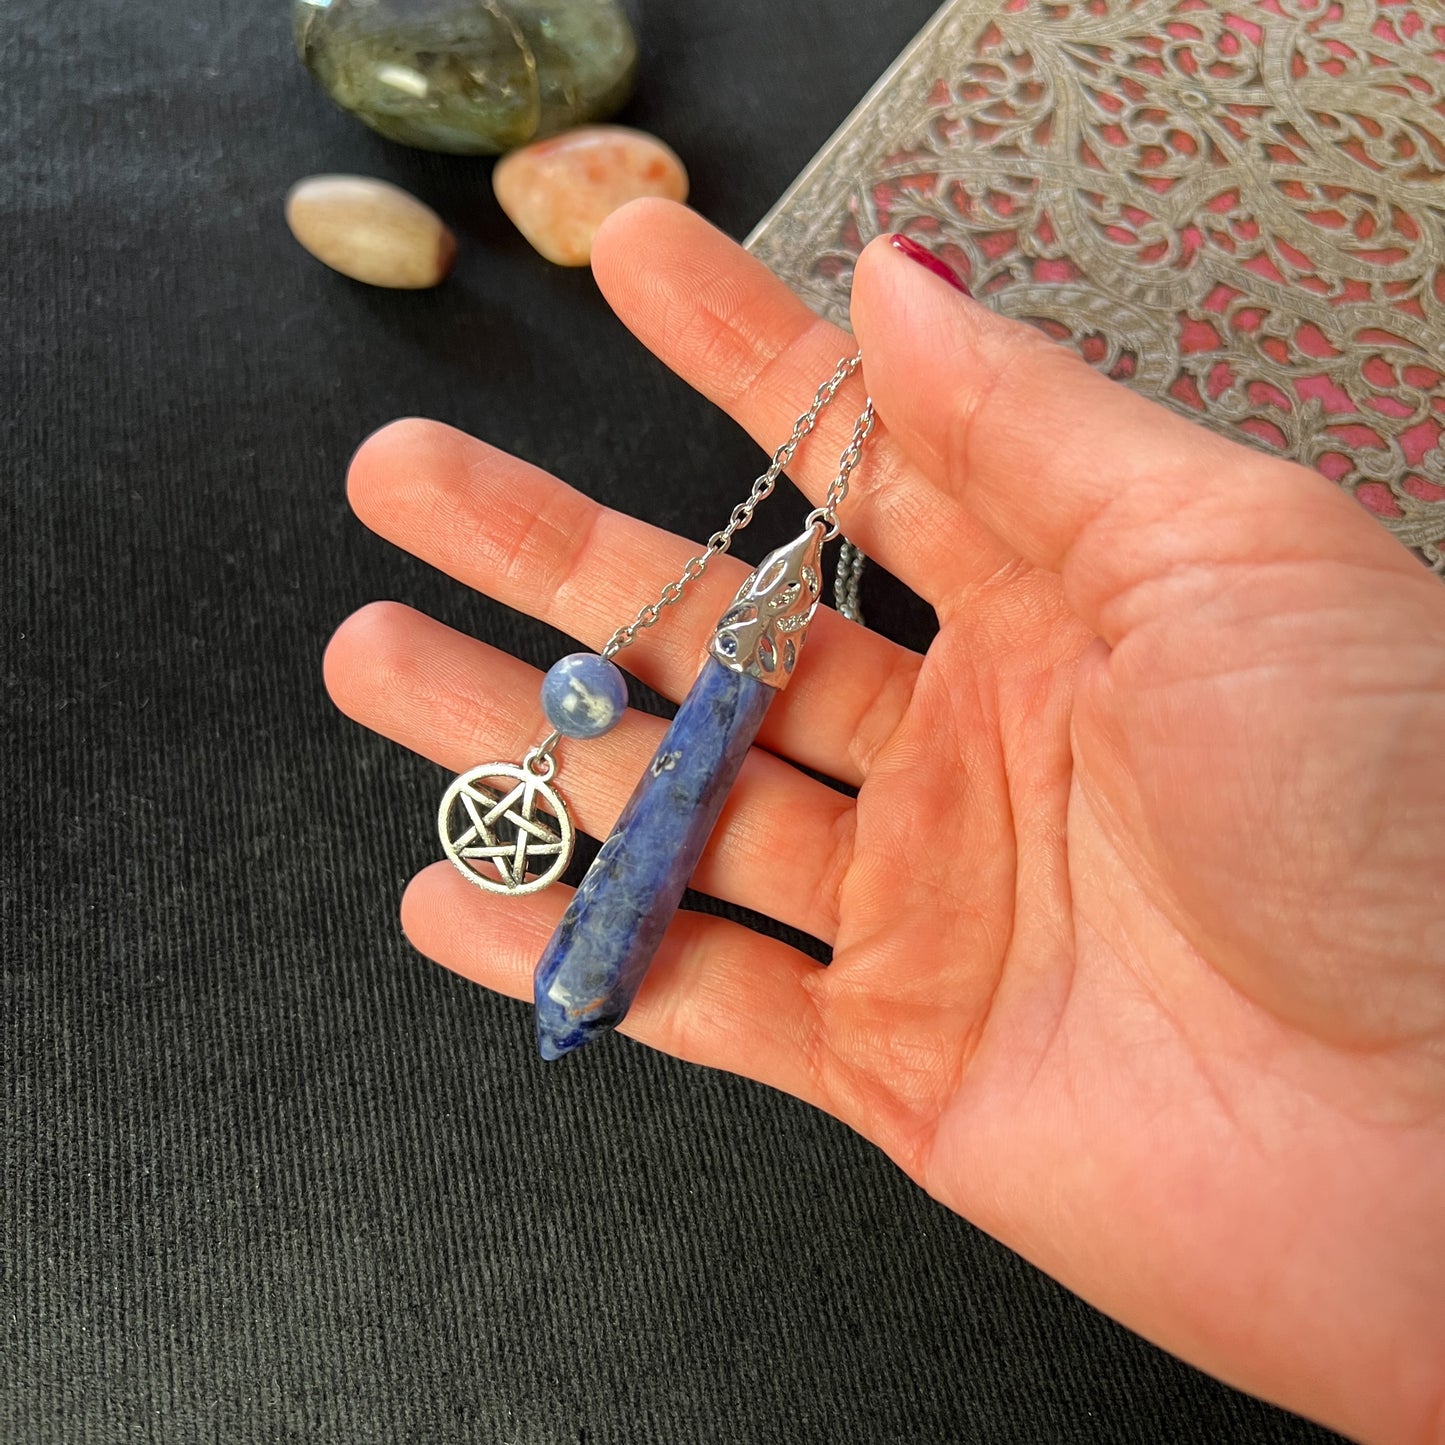 Sodalite and pentacle dowsing pendulum